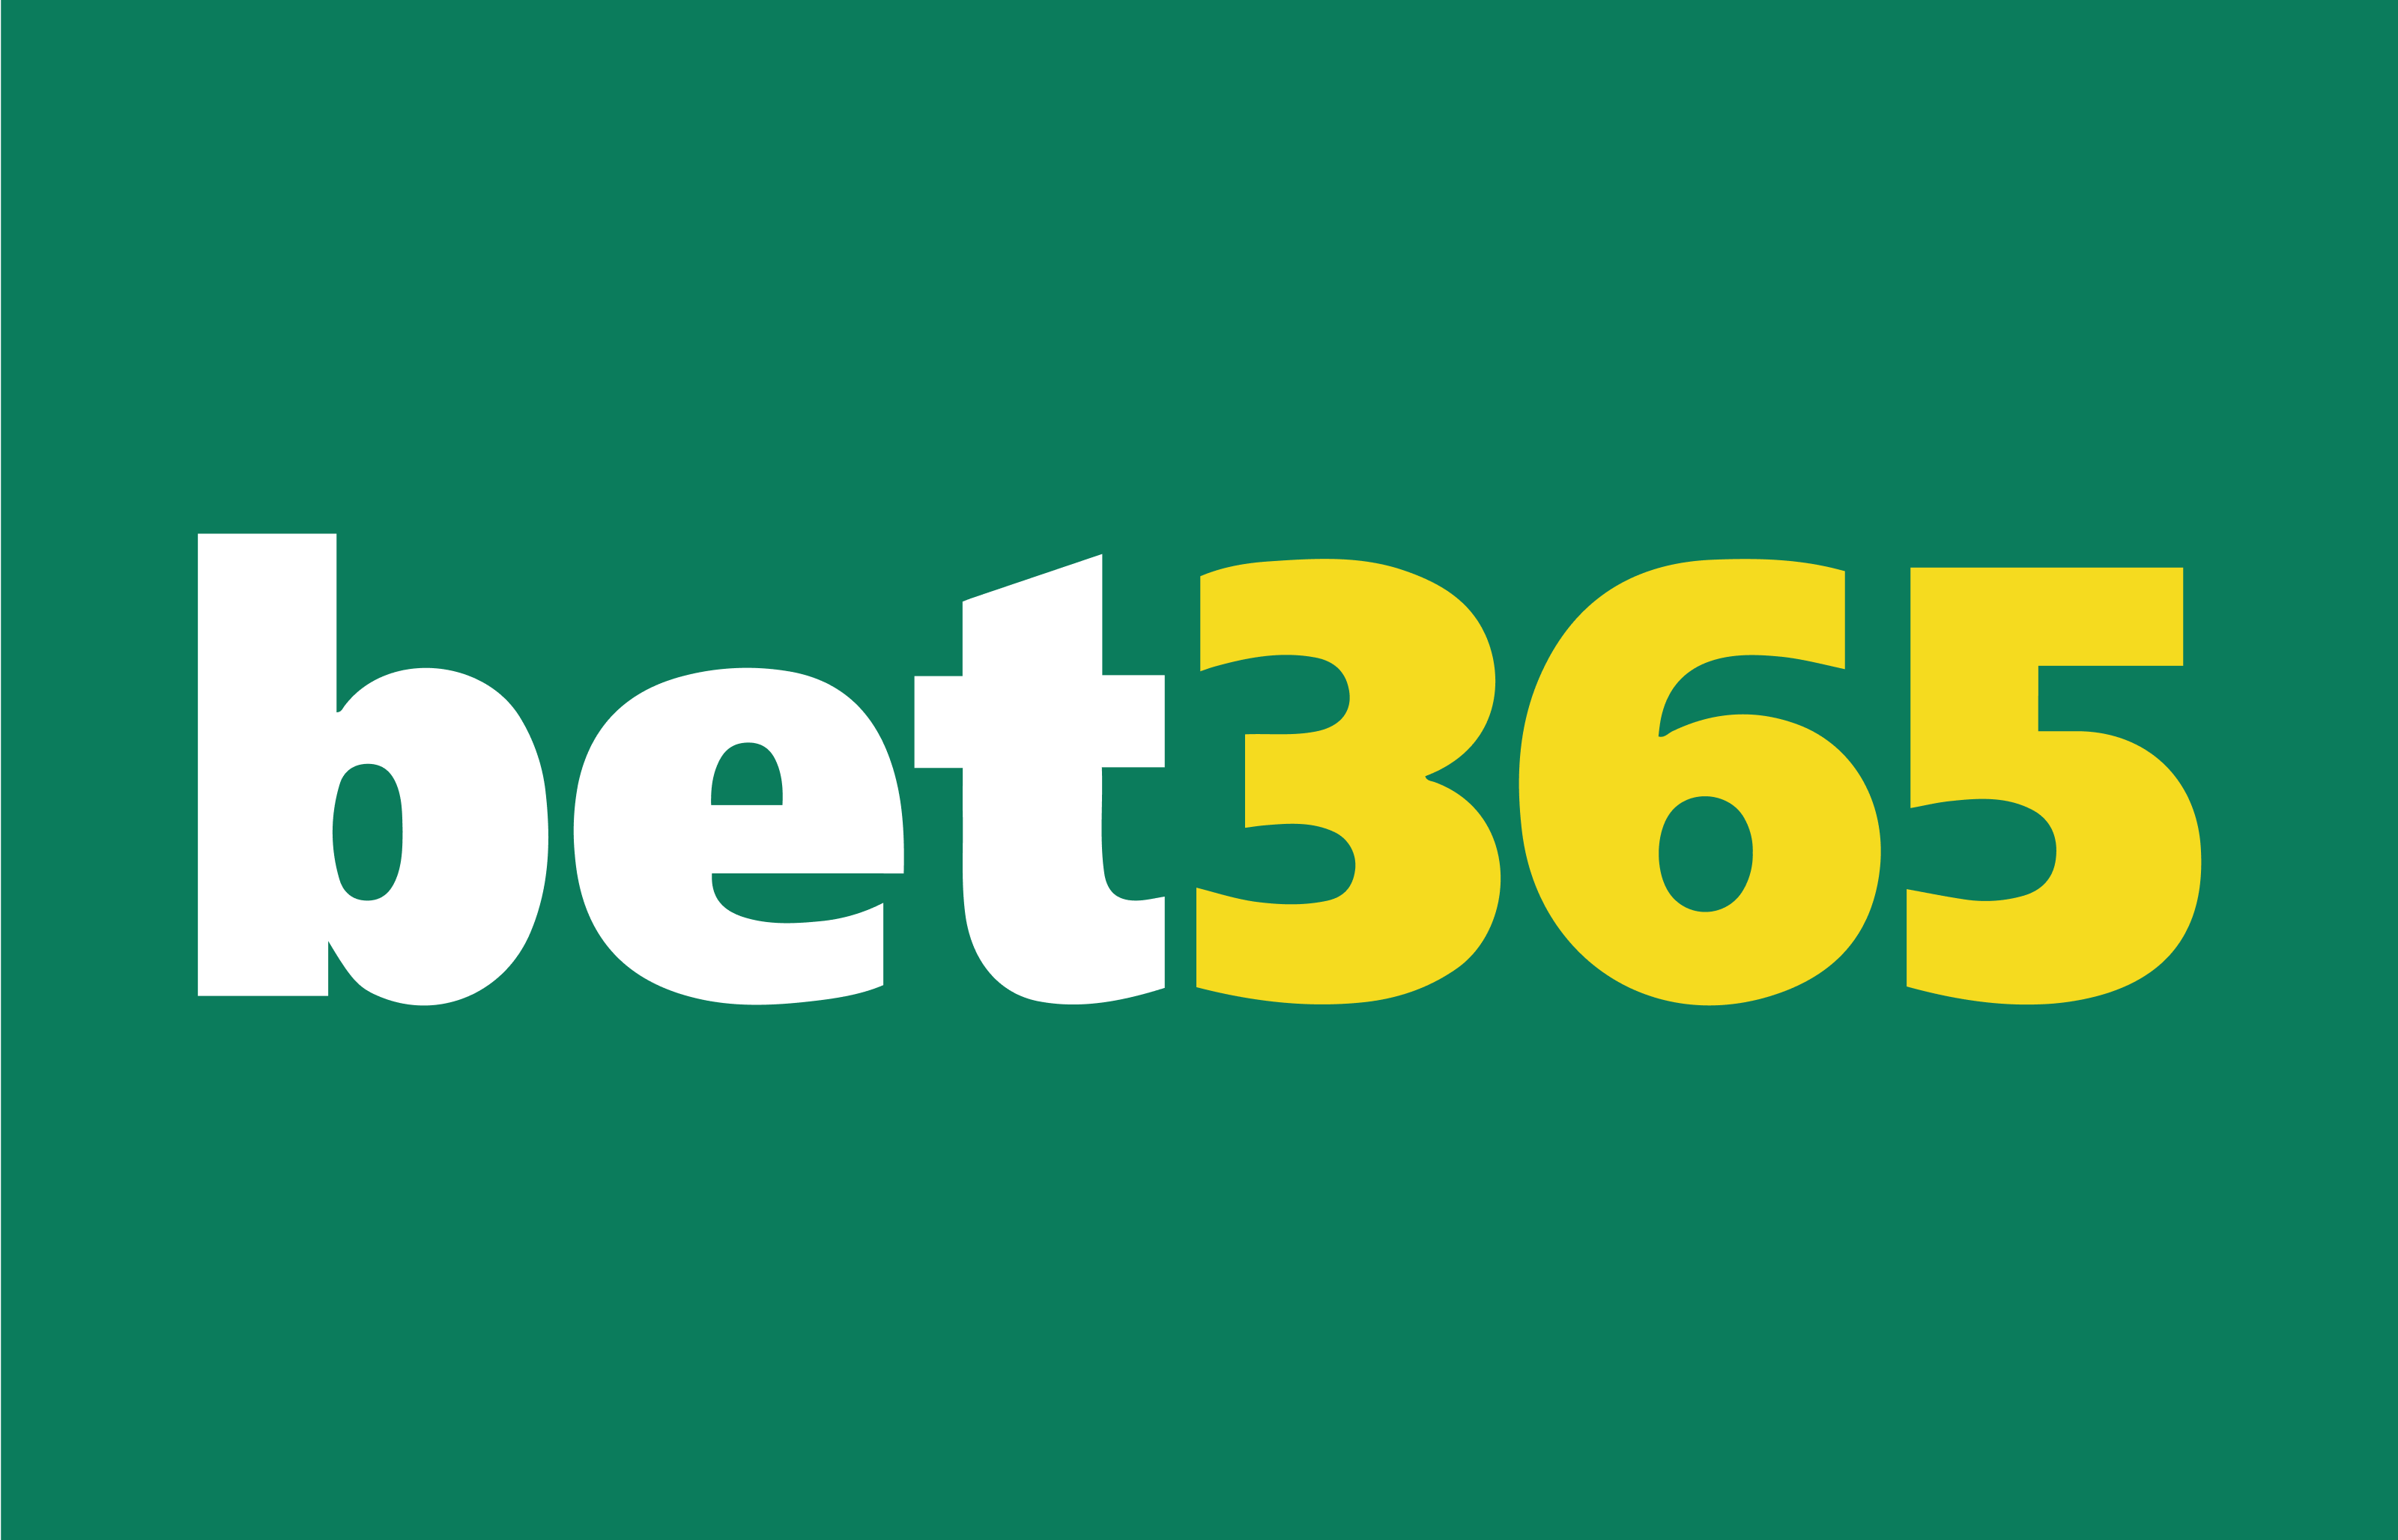 365 реб. Bet365. Бет365 Англия. Bet365 logo PNG.